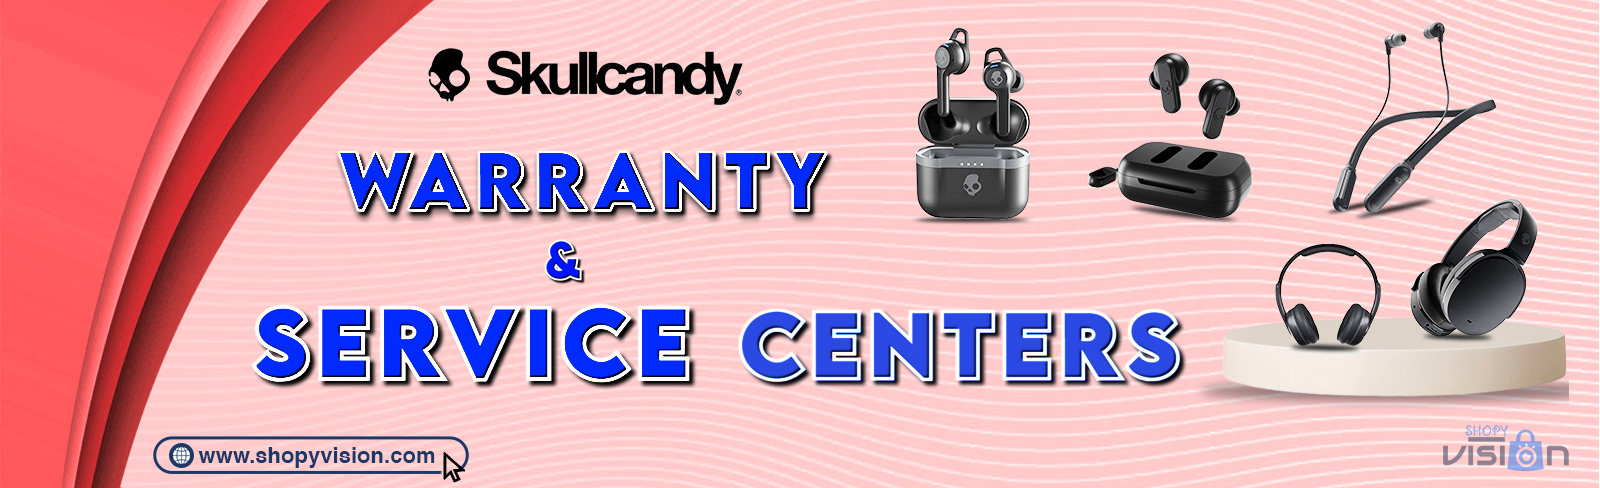 Skullcandy Warranty & Service Center banner